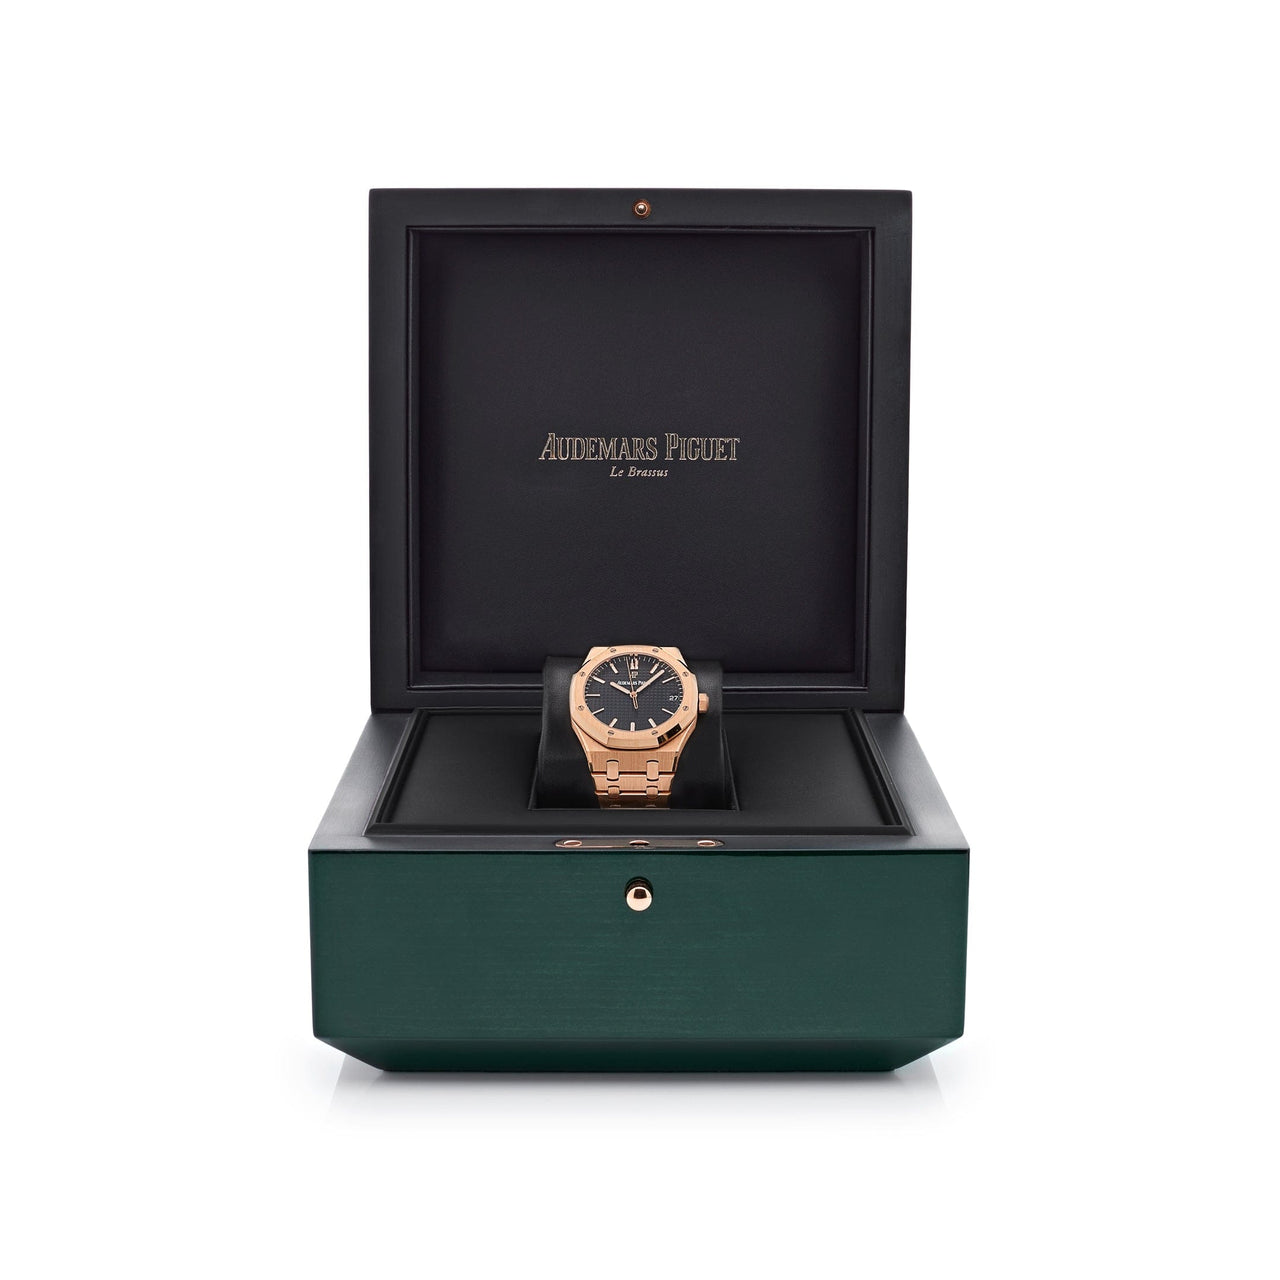 Luxury Watch Audemars Piguet Royal Oak Selfwinding Rose Gold Black Dial 41mm 15500OR.OO.1220OR.01 Wrist Aficionado